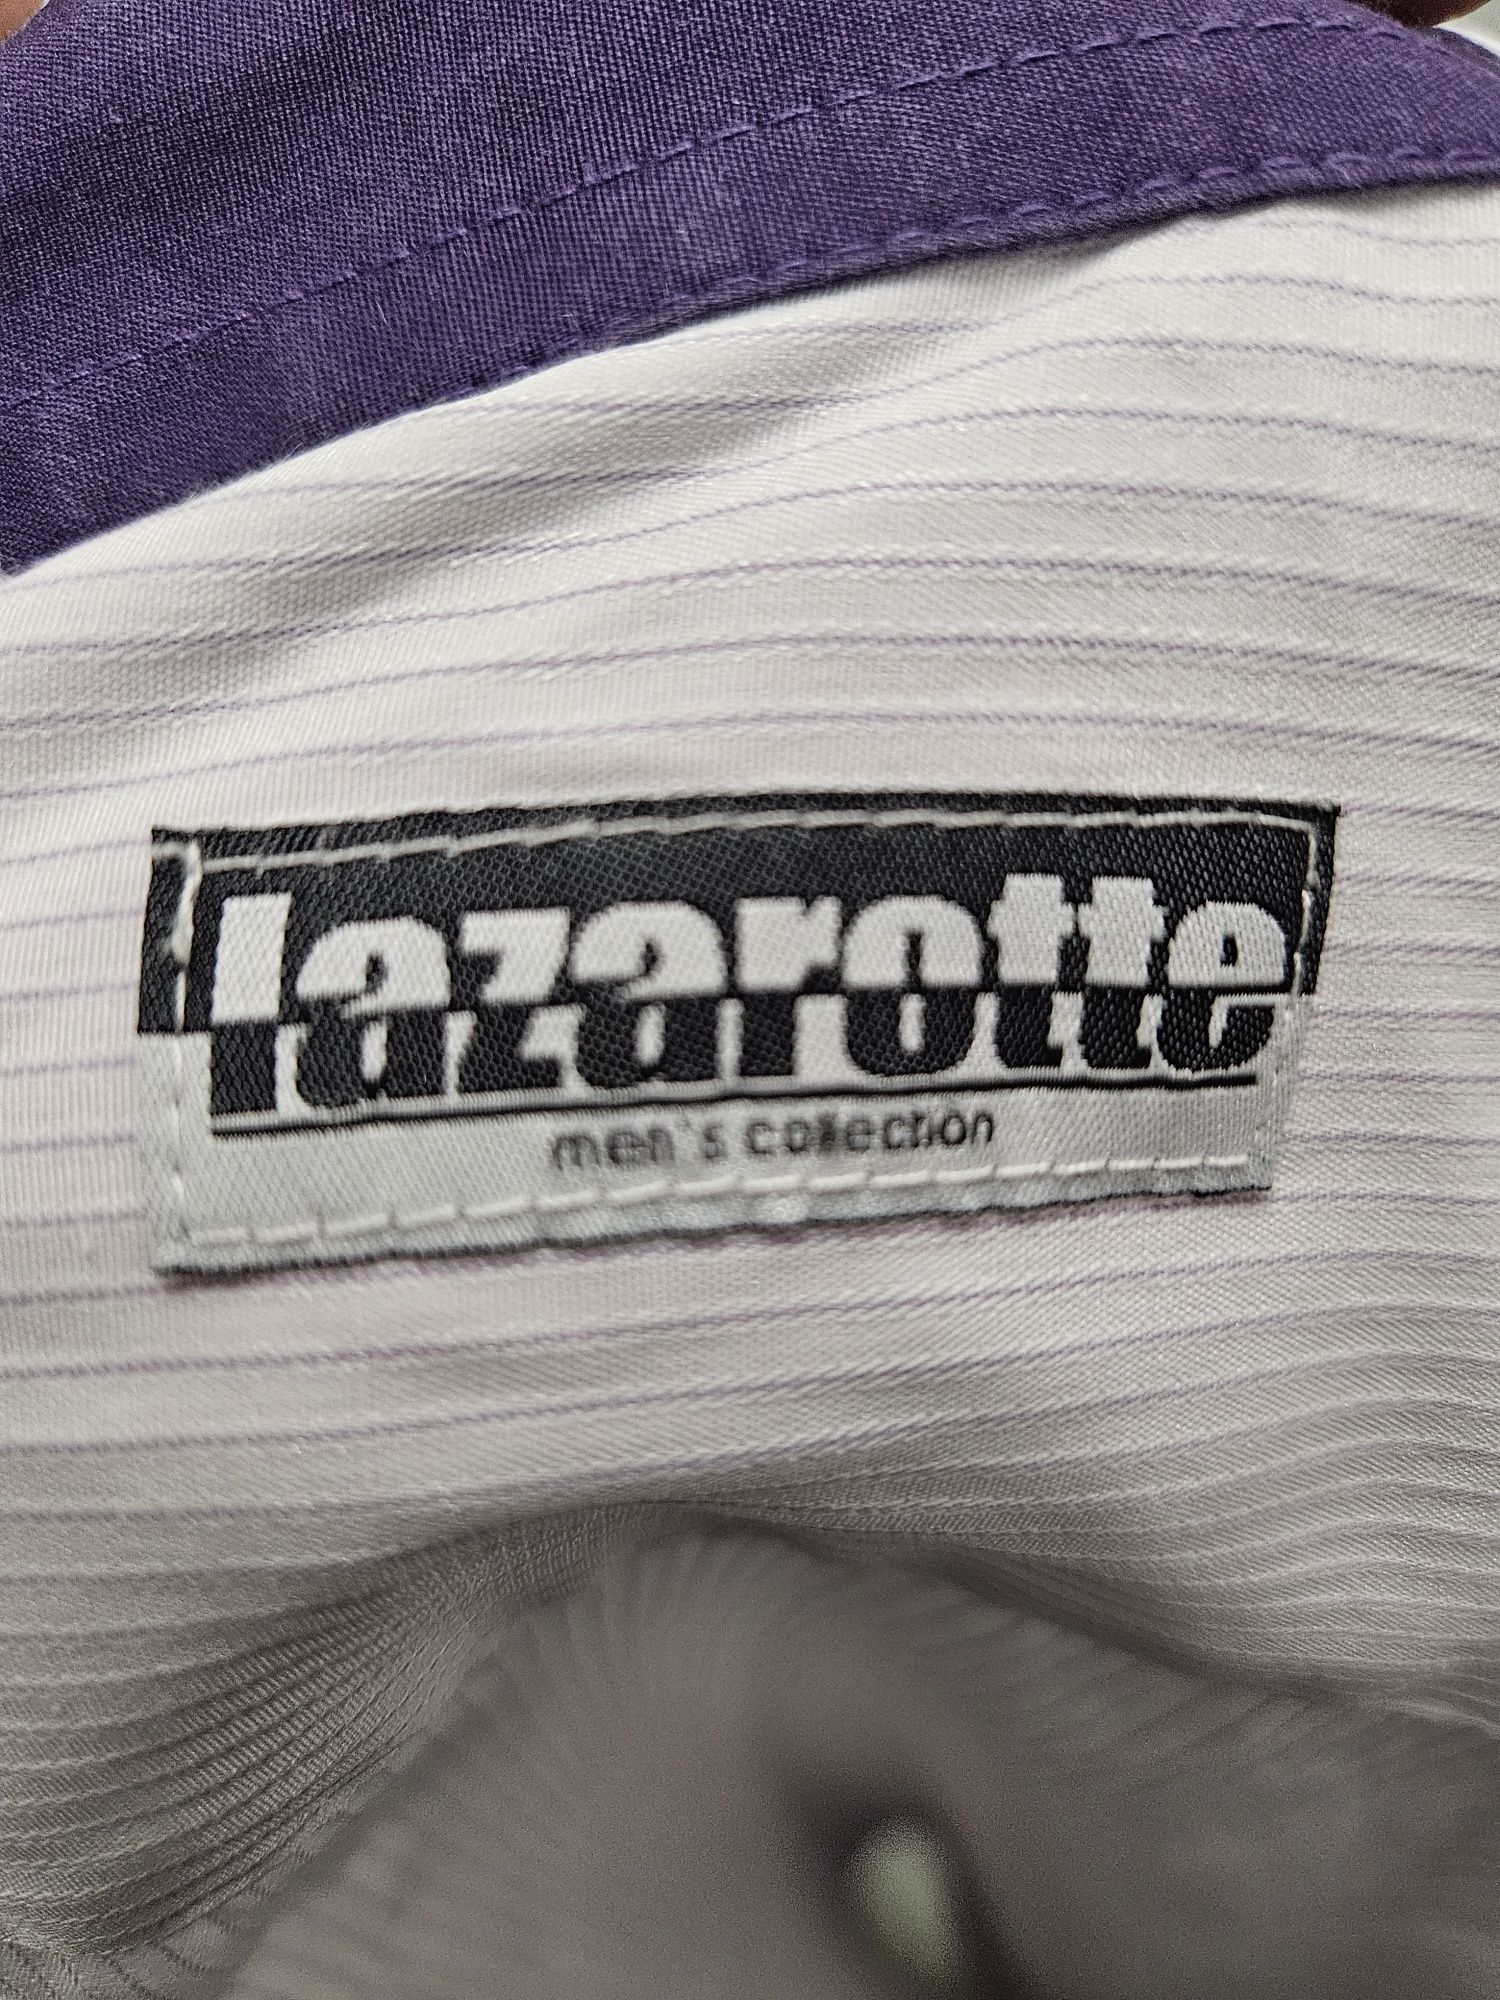 Koszula Lanzarote używana